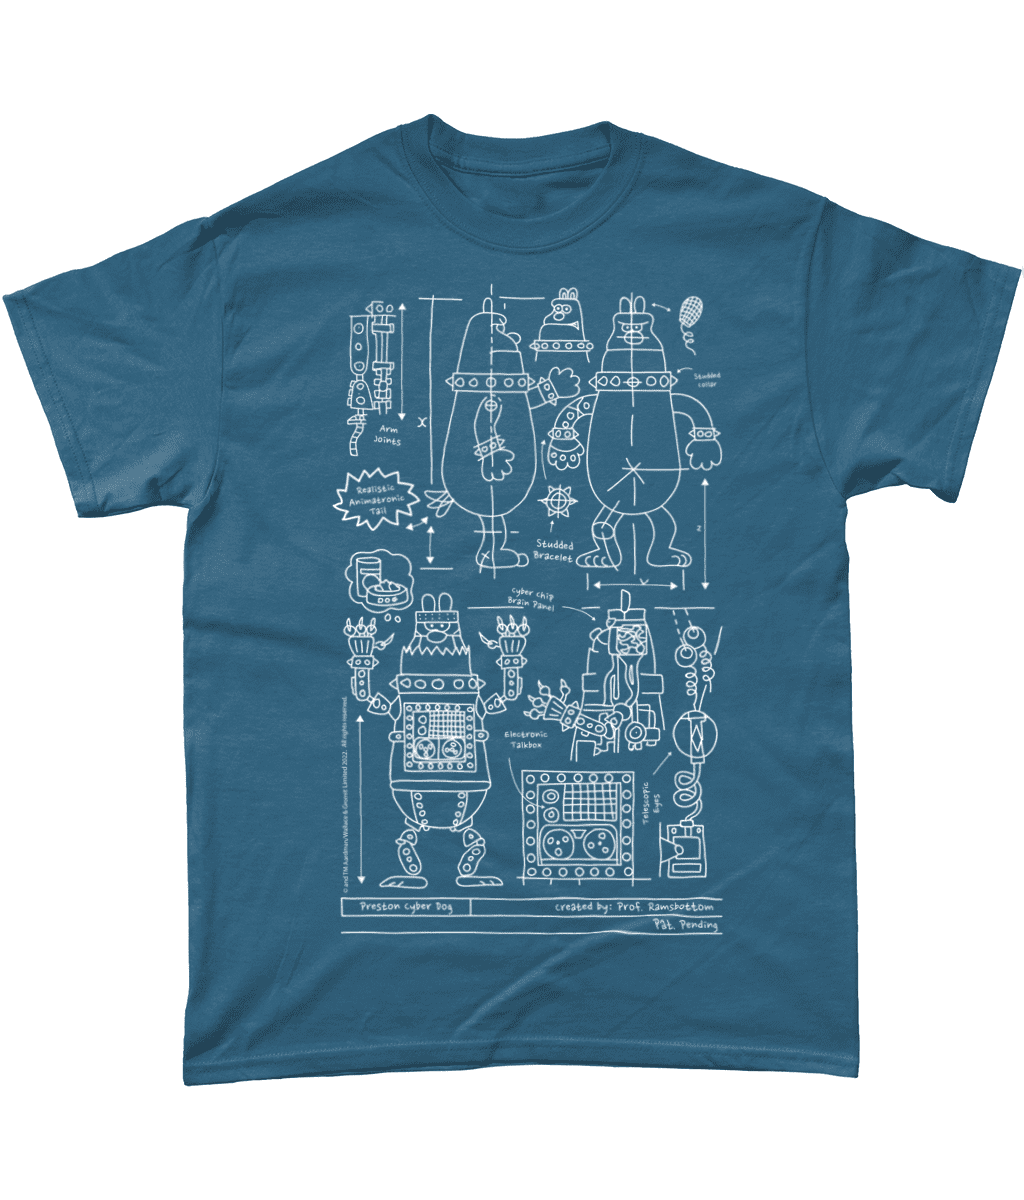 Wallace and Gromit Robot Preston Blueprint T-Shirt Indigo